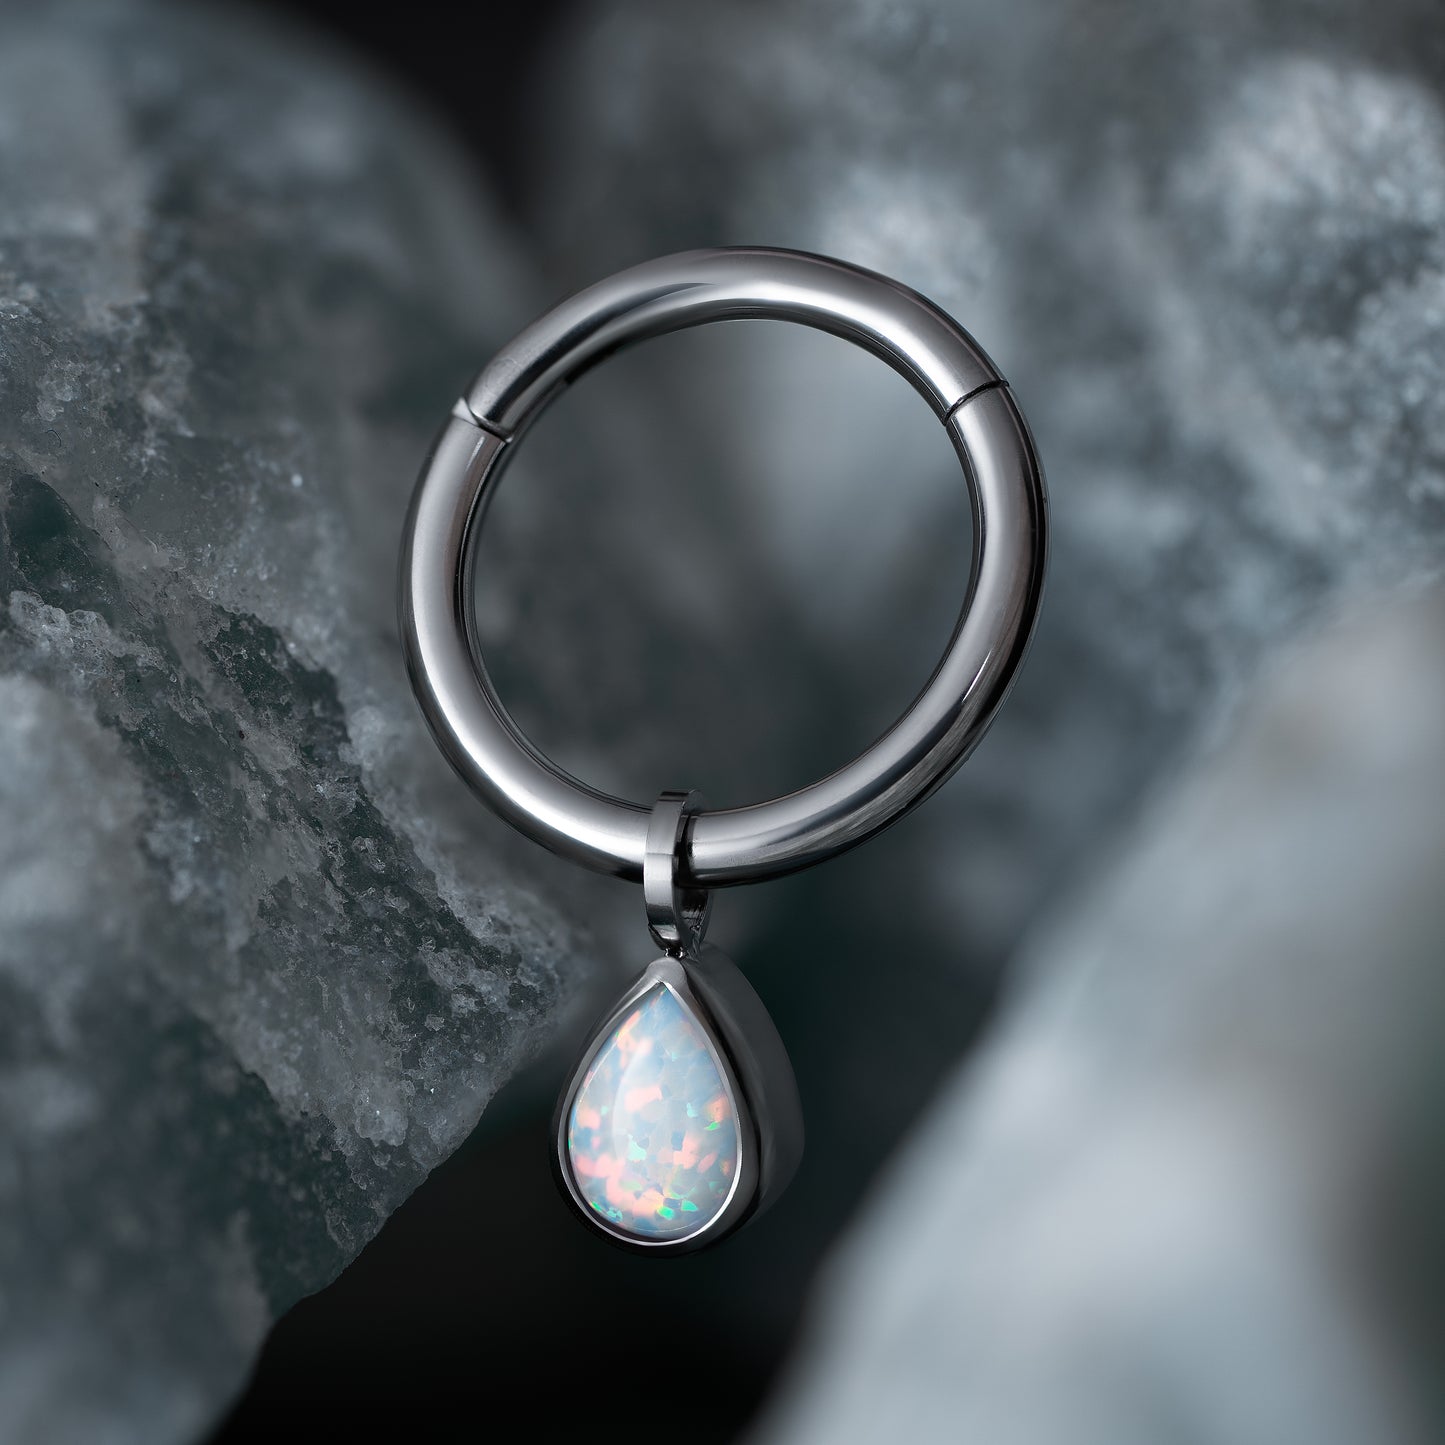 Drop Opal Hinged Segment Ring 1.2 (16 G)